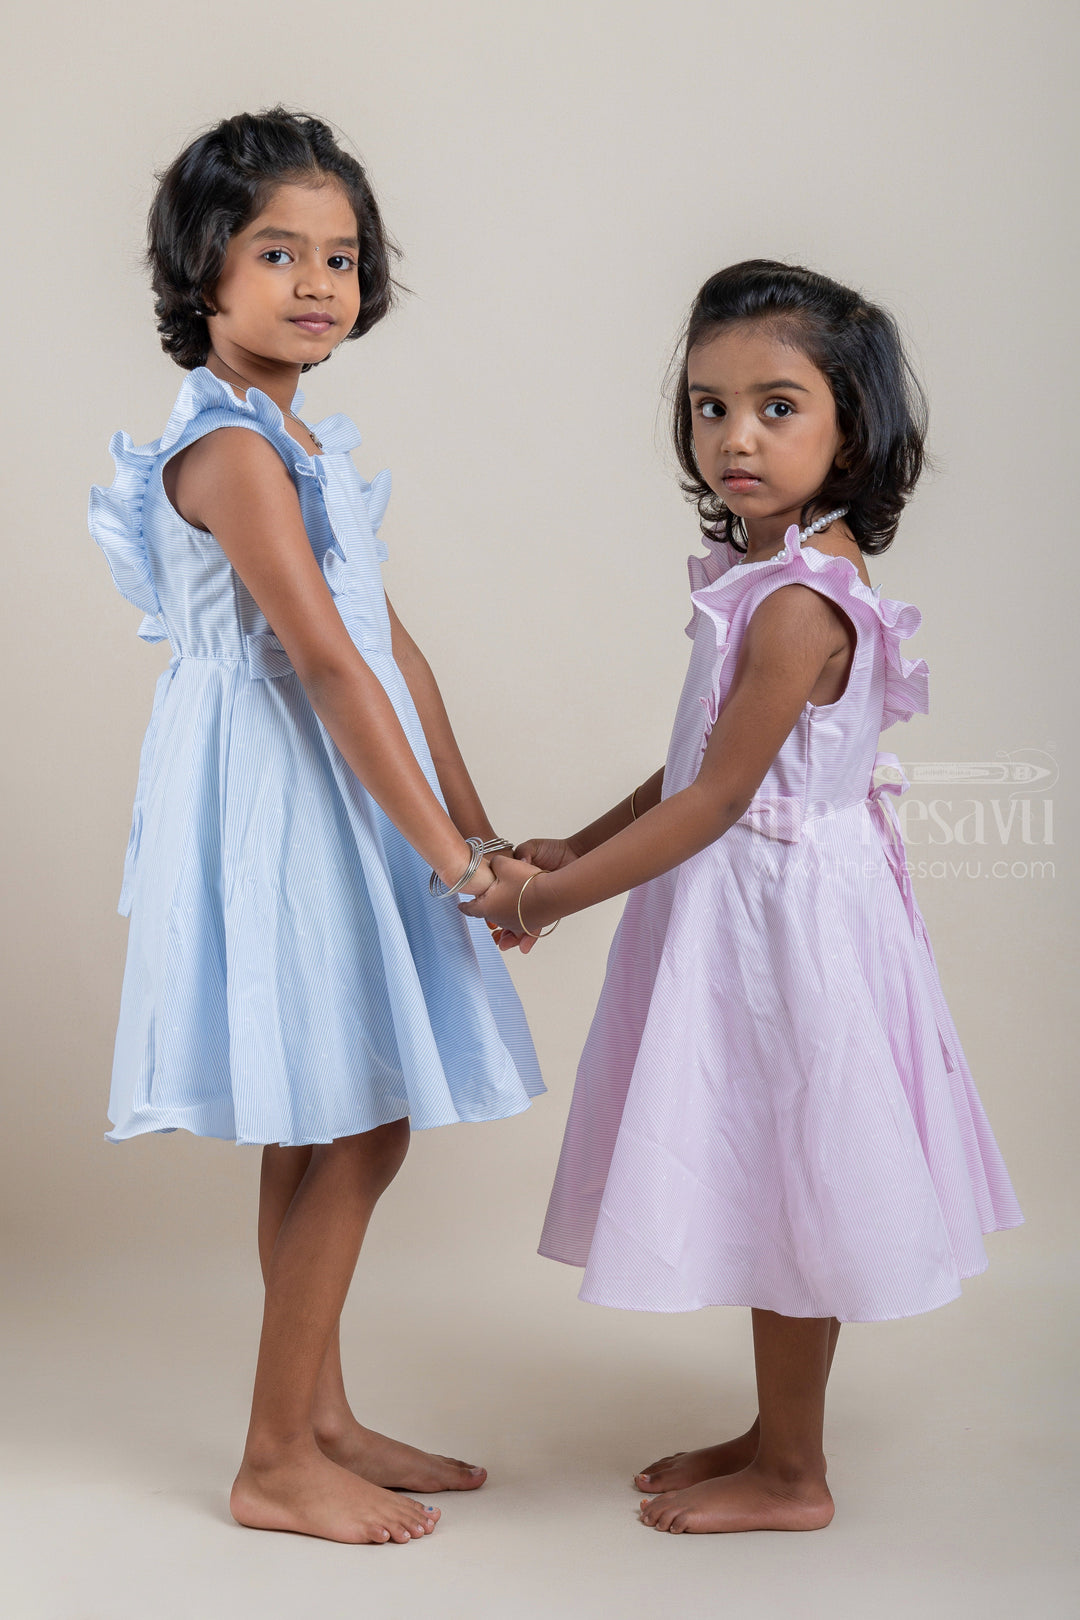 The Nesavu Frocks & Dresses Casual Cotton Frock with Blue Pin Striped Design and Ruffled Yoke For Girls psr silks Nesavu